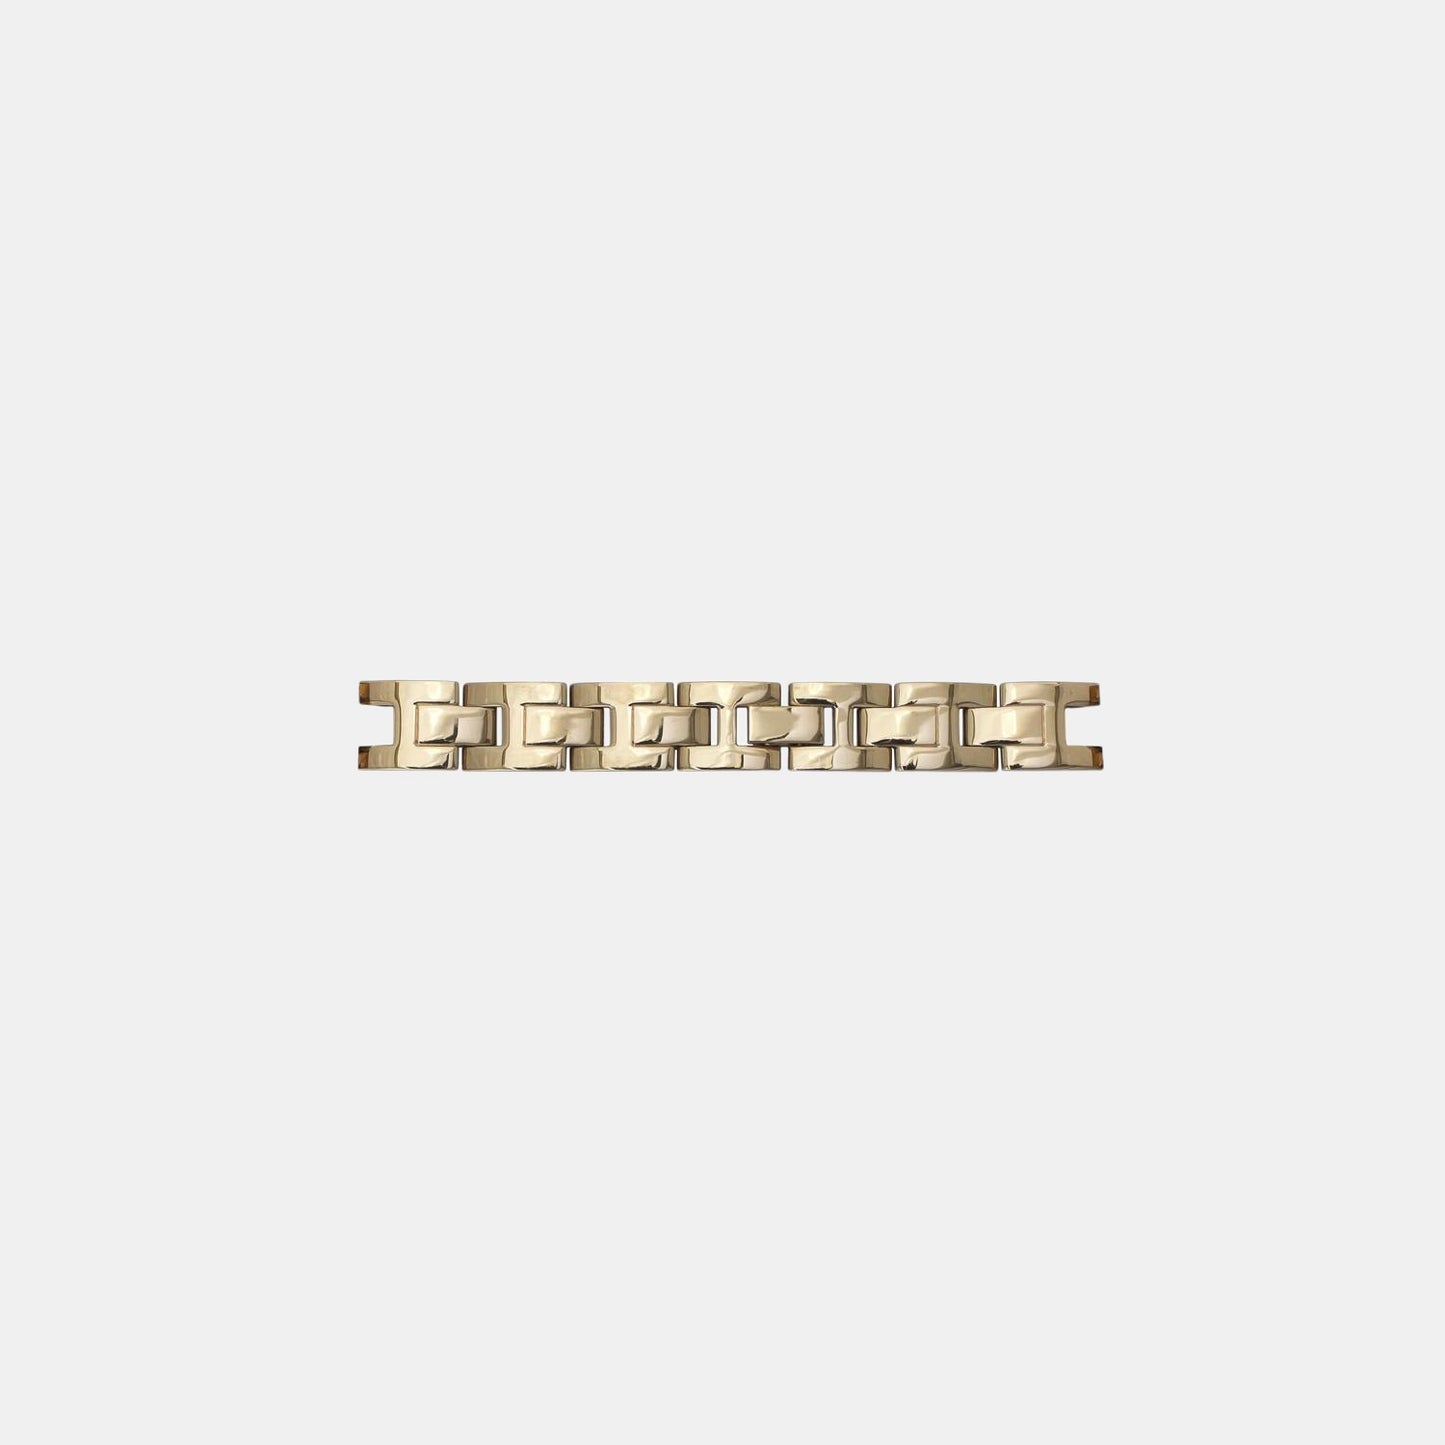 timex-brass-rose-gold-analog-female-watch-twel13401